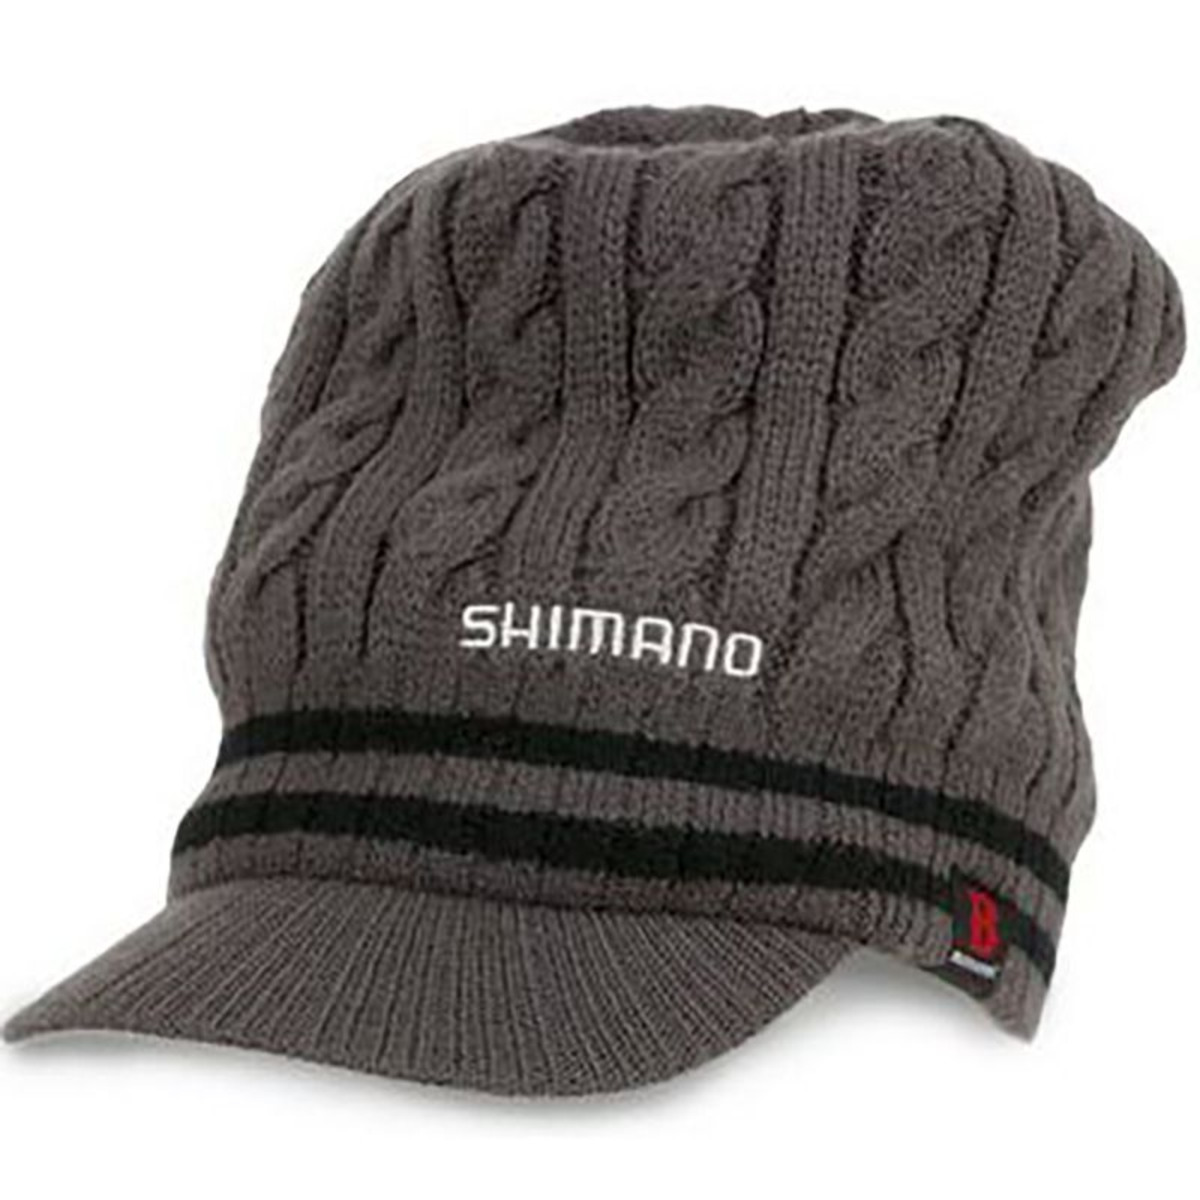 Shimano Breath Hyper Knit Cap with Visor - Black